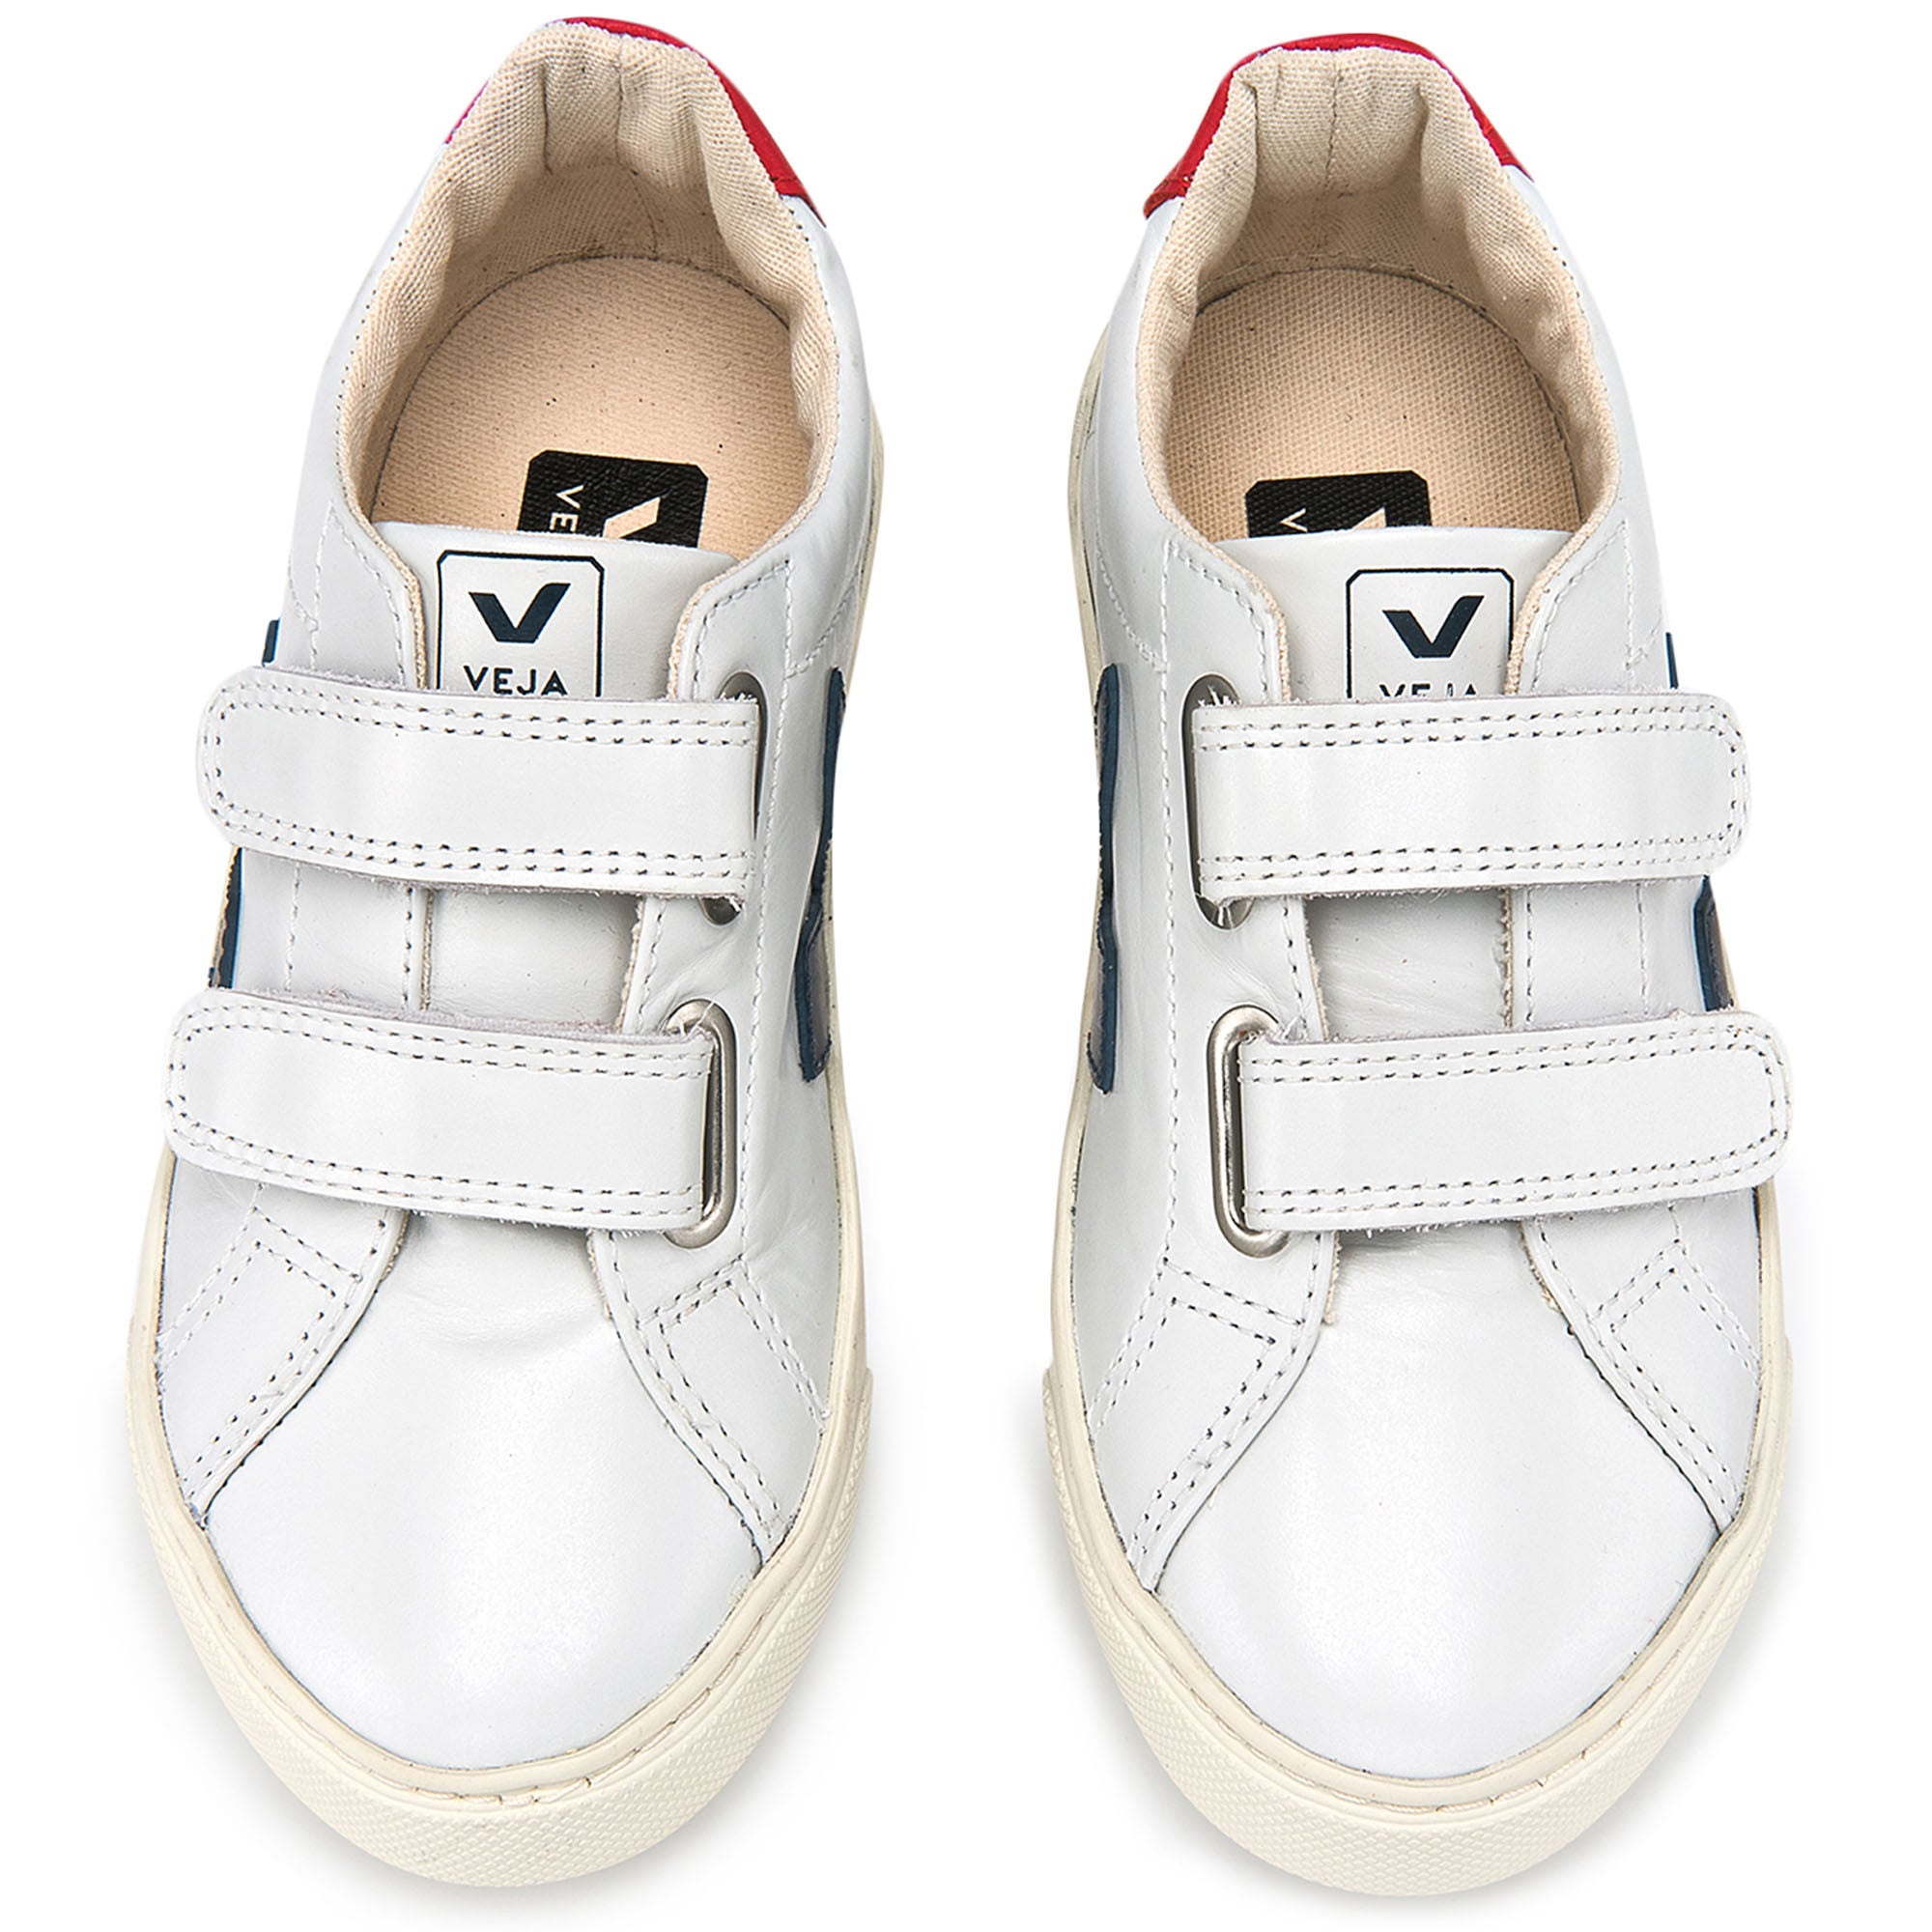 Boys&Girls White Leather Velcro Shoes - CÉMAROSE | Children's Fashion Store - 1